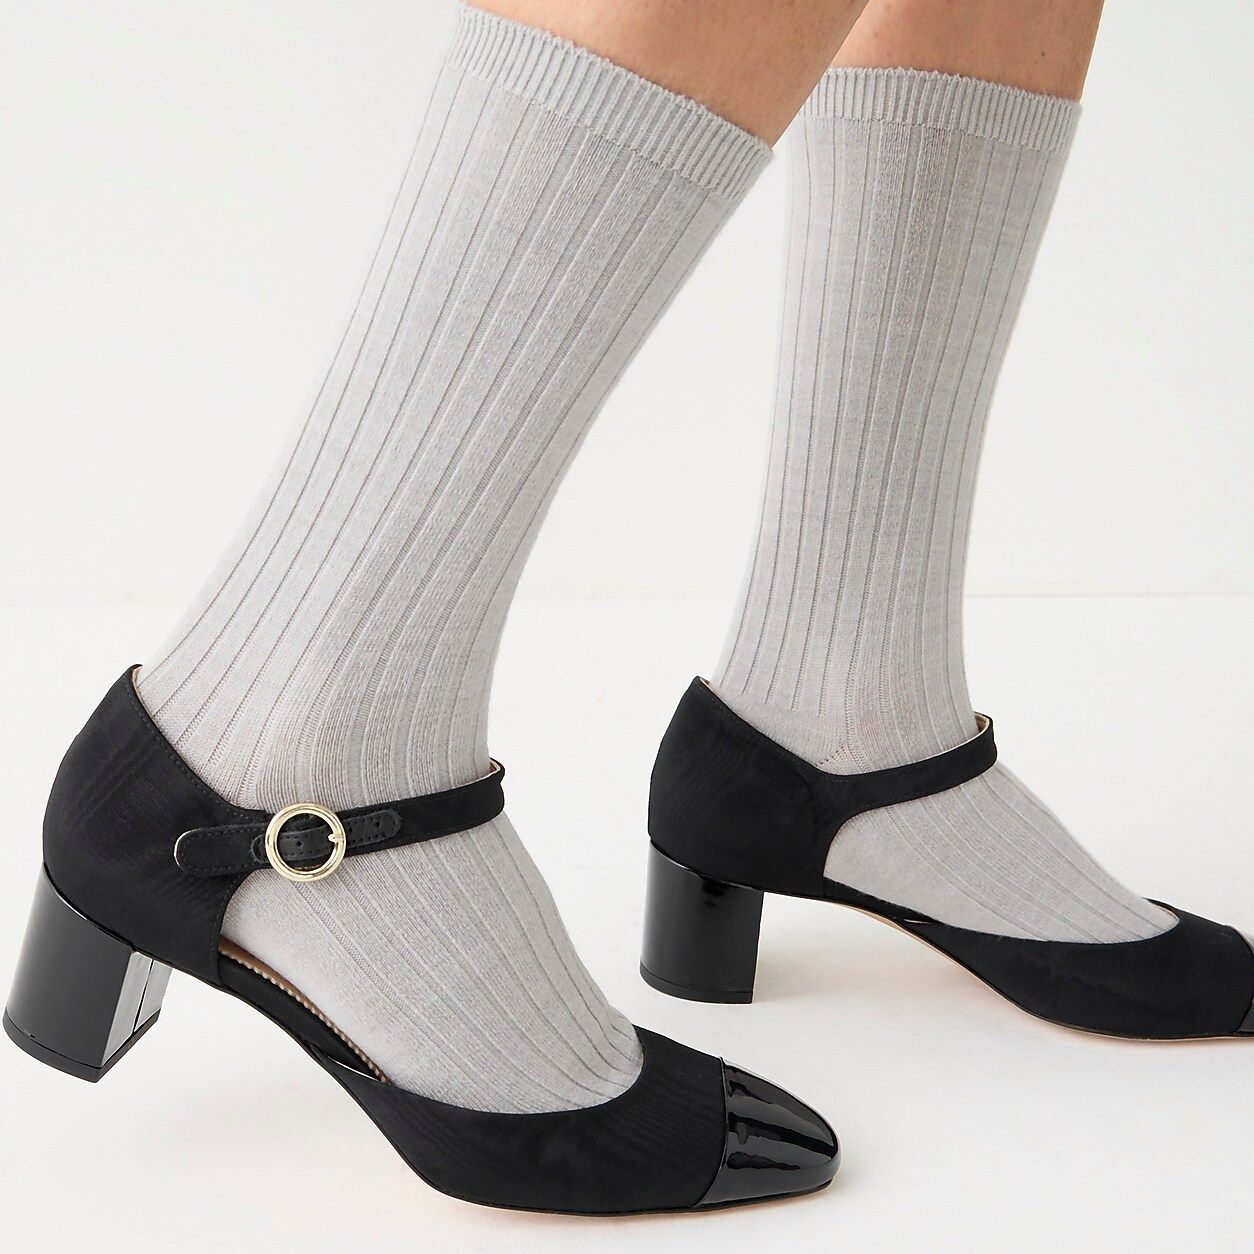 Millie ankle-strap heels in Italian leather | J.Crew US